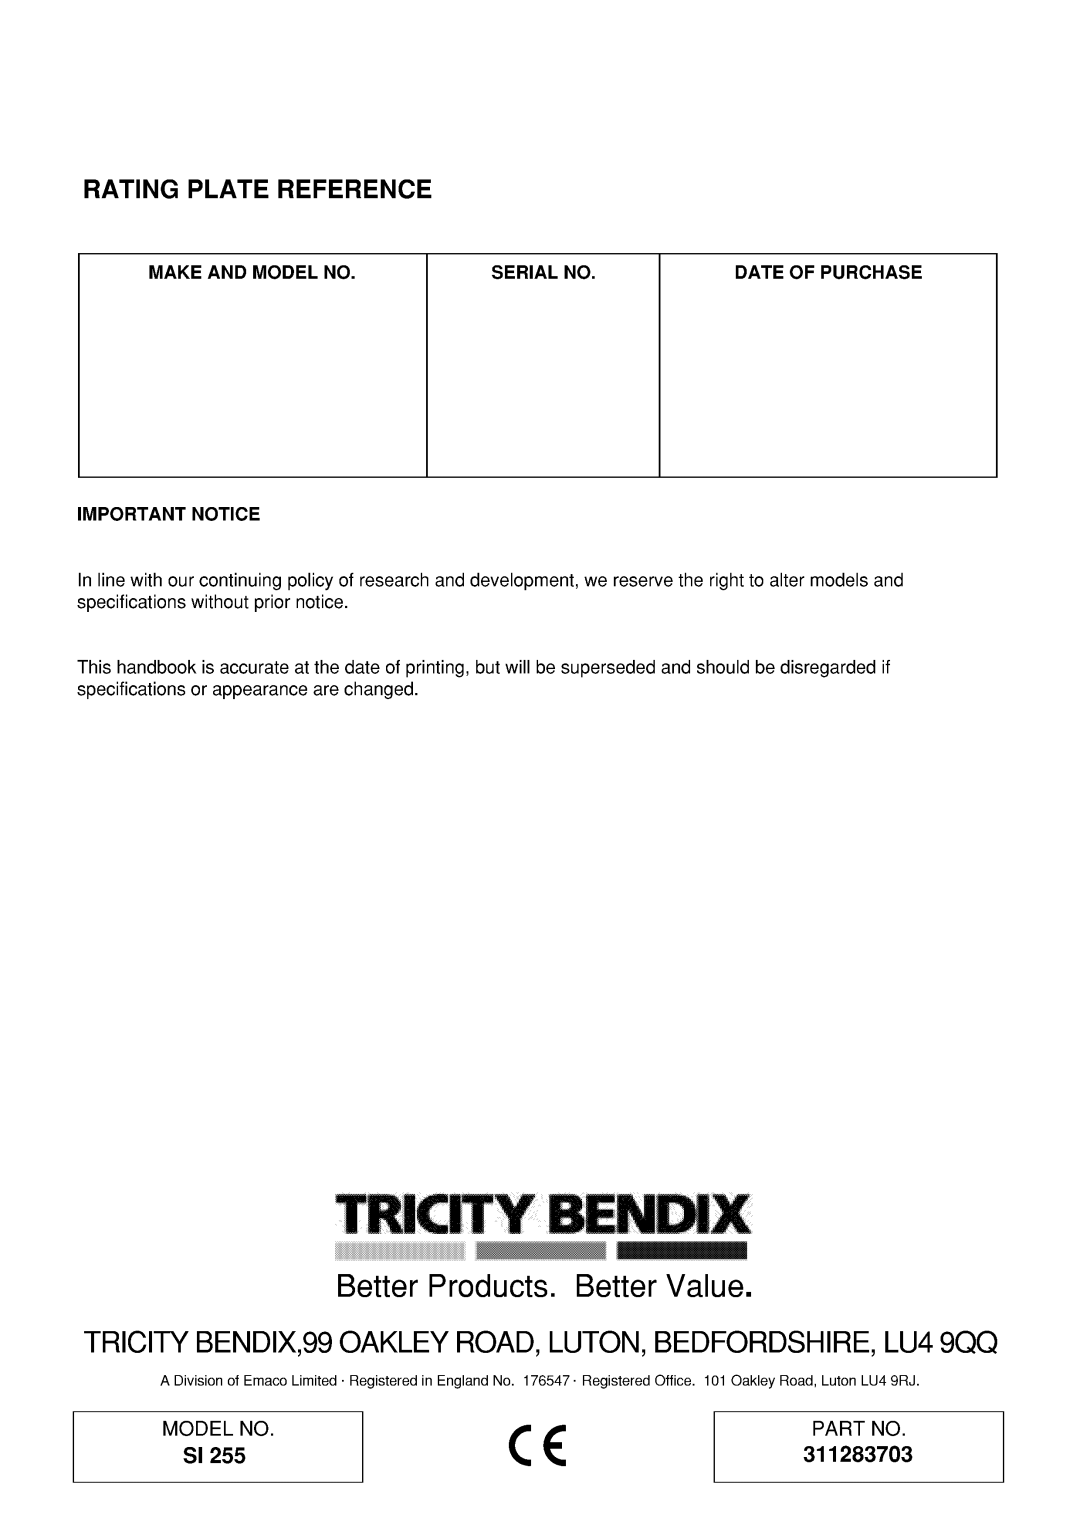 Tricity Bendix SI 255 manual 